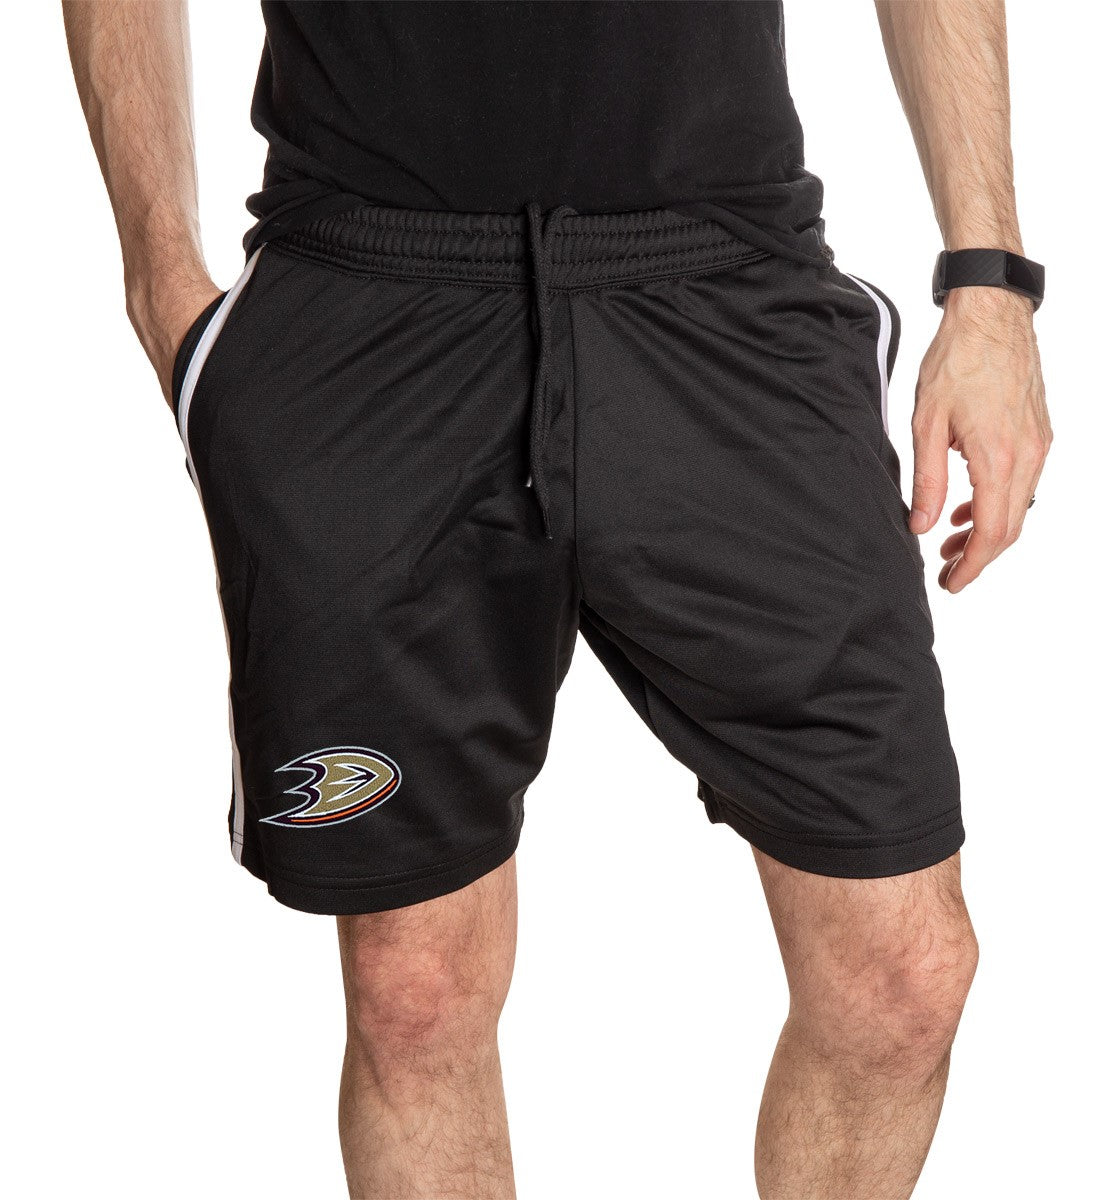 Anaheim Ducks Two-Stripe Shorts for Men